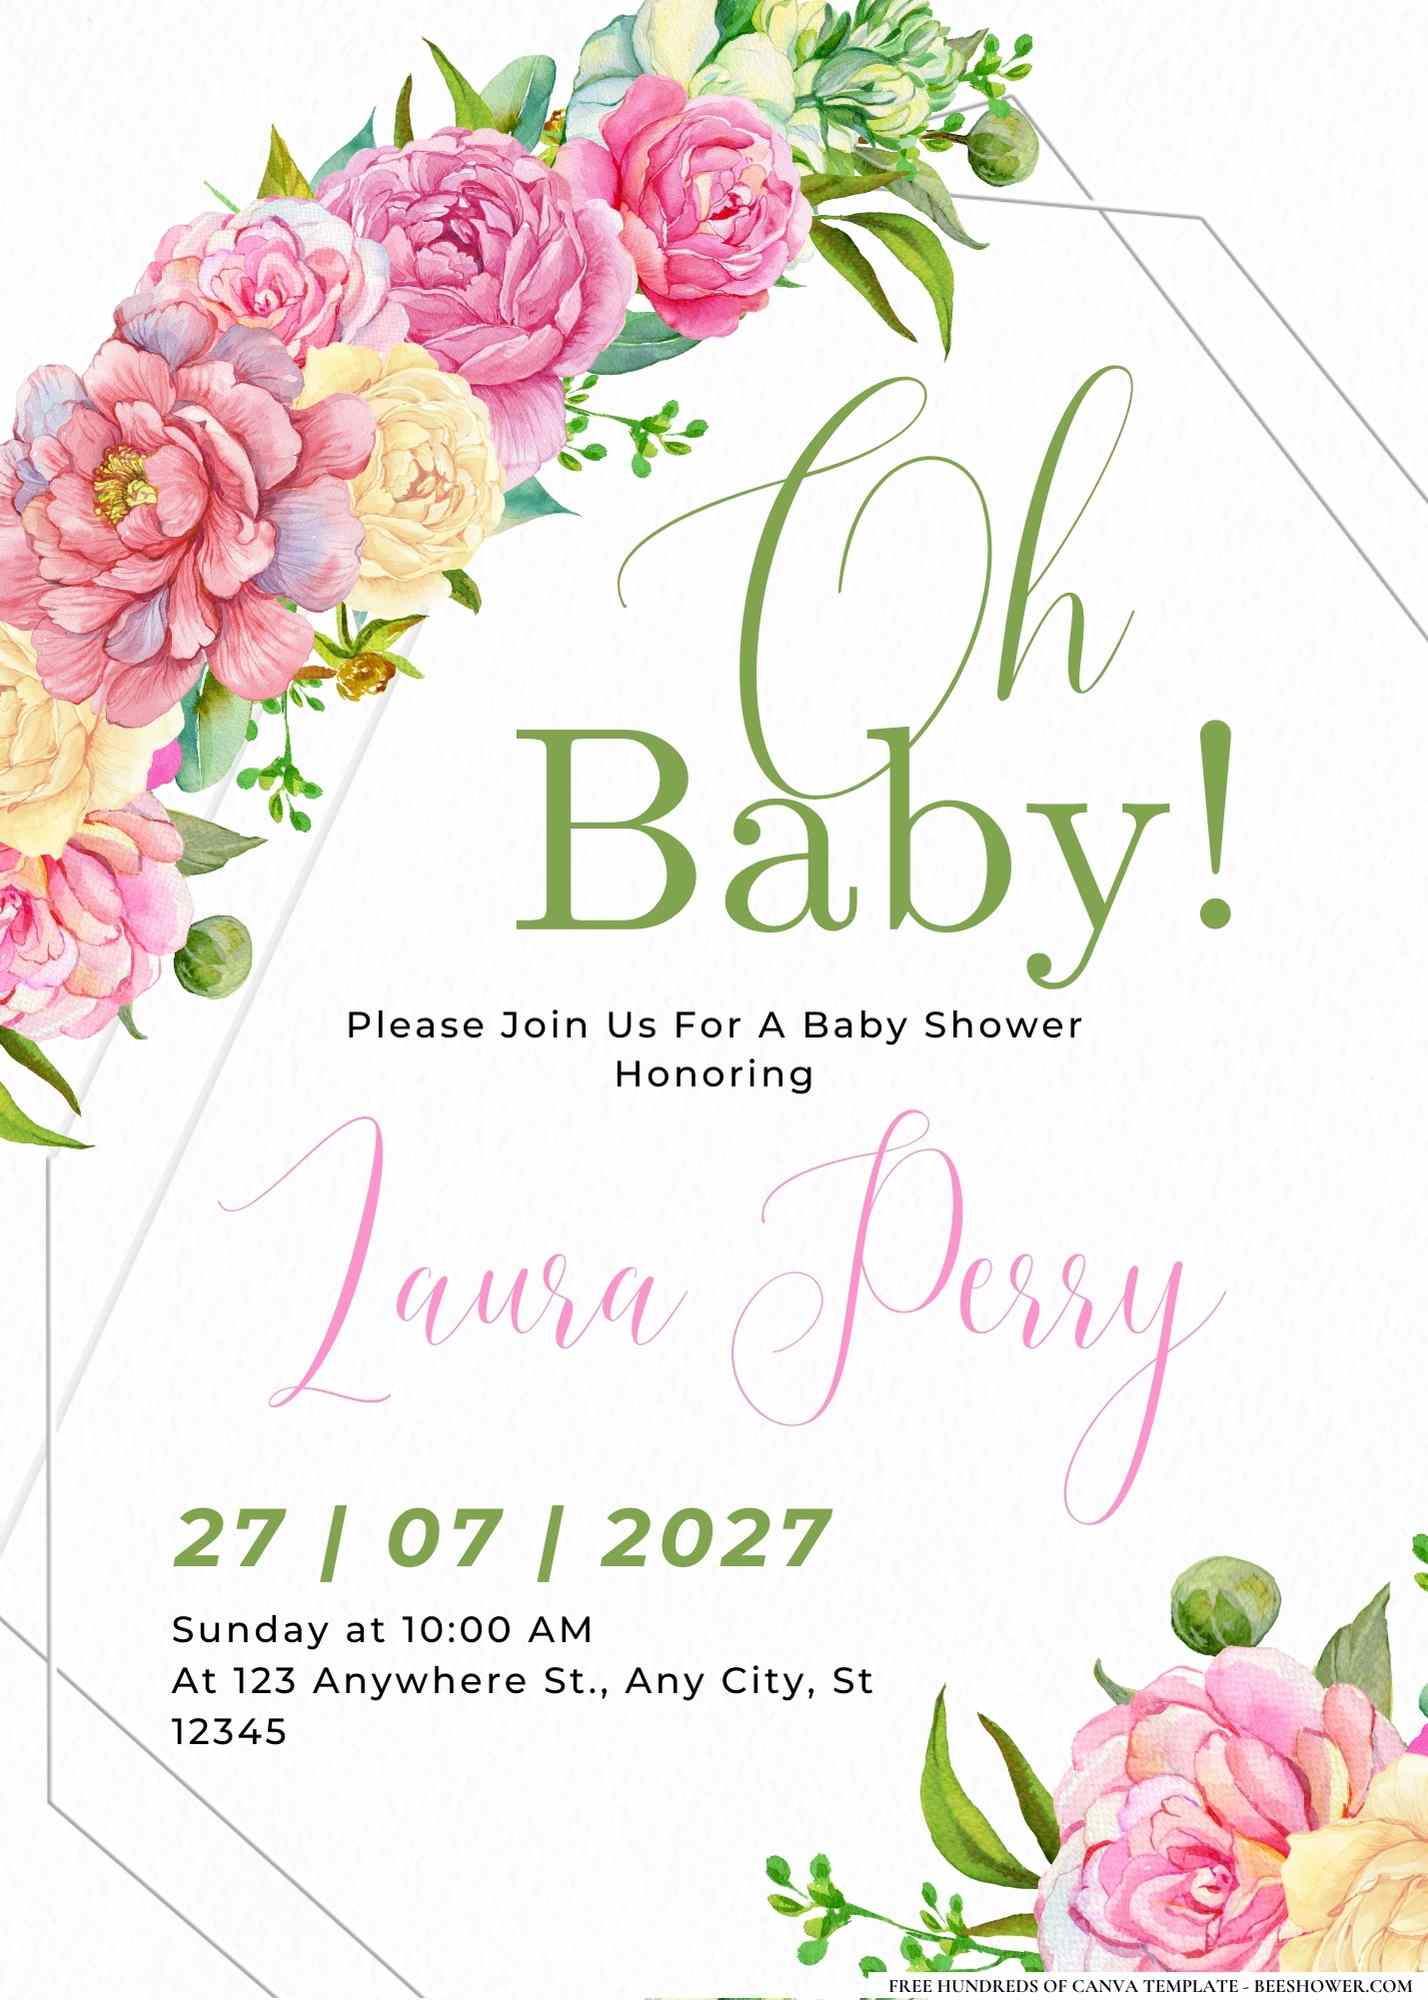 Blooms of Babyhood Baby Shower Invitation